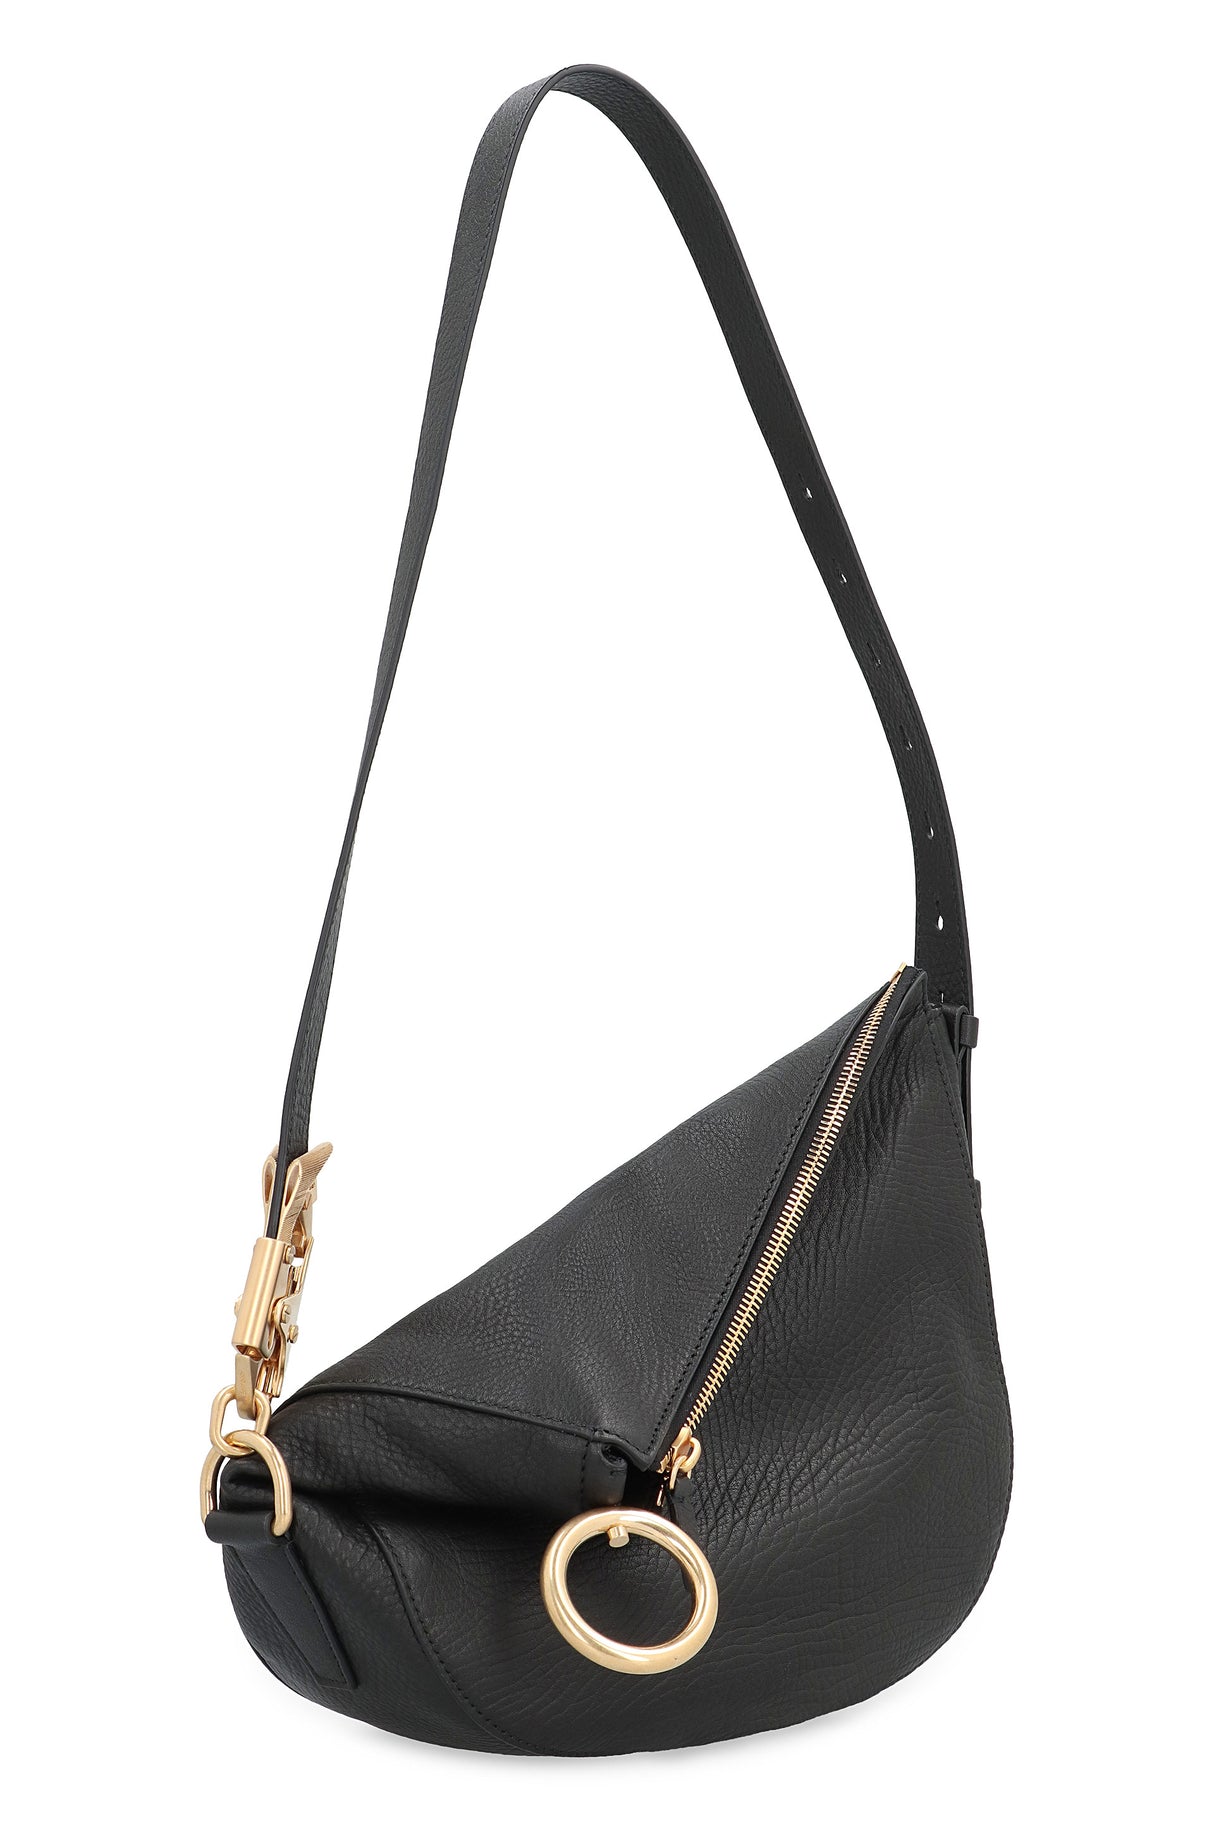 BURBERRY Black Leather Shoulder Handbag for Women - FW23